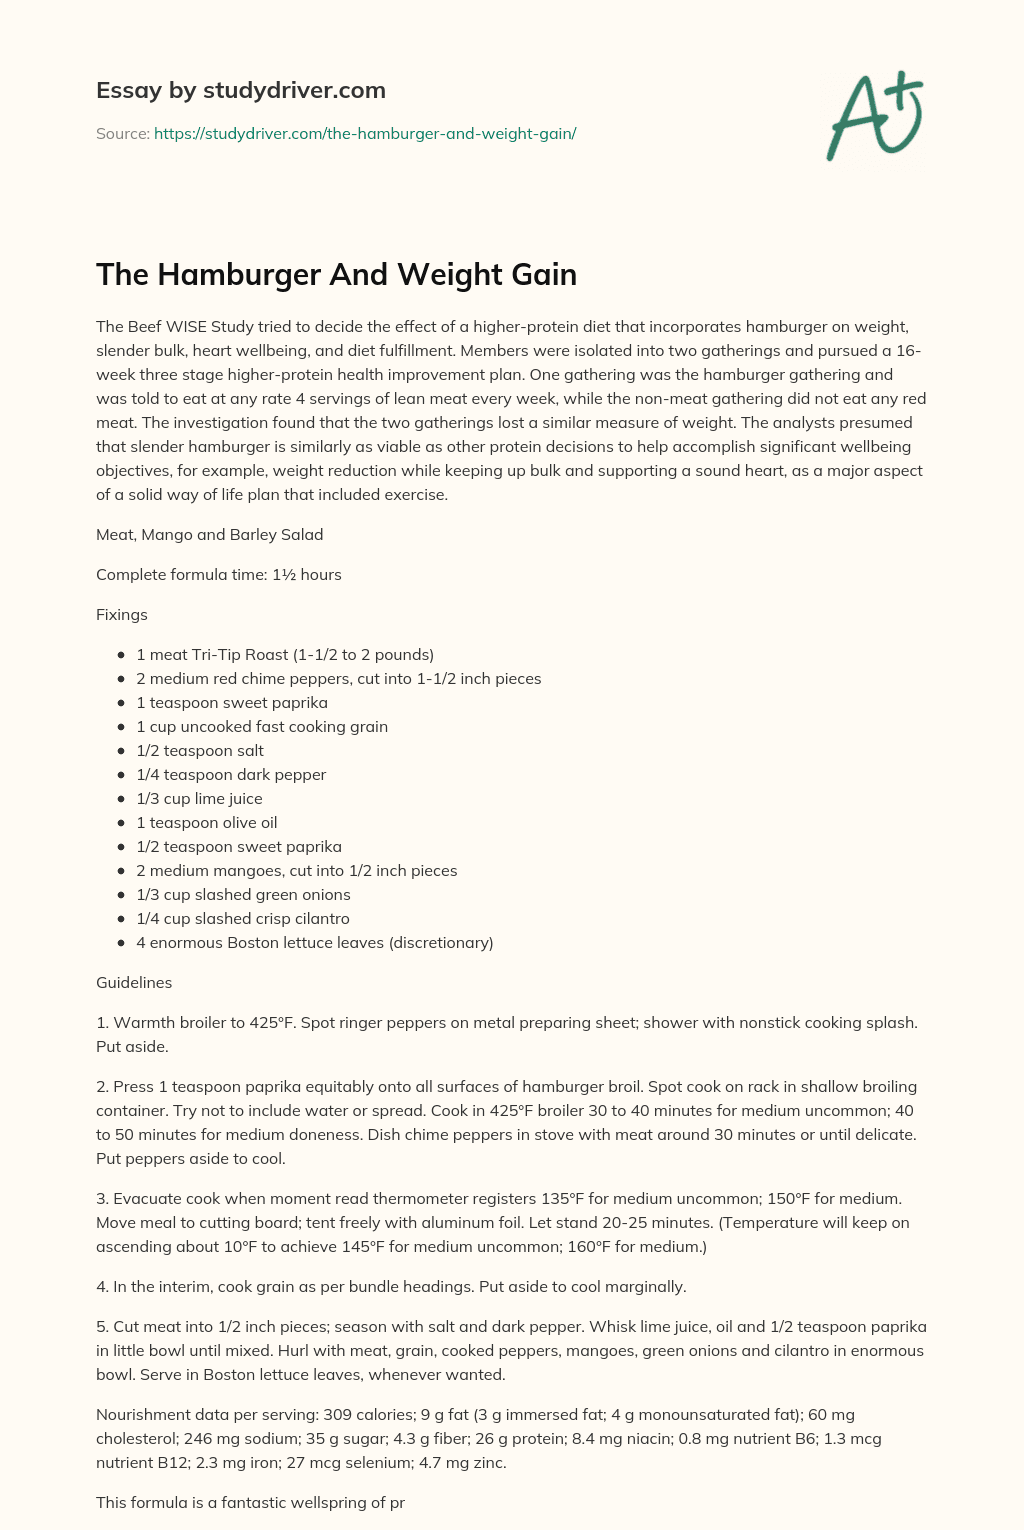 The Hamburger and Weight Gain essay